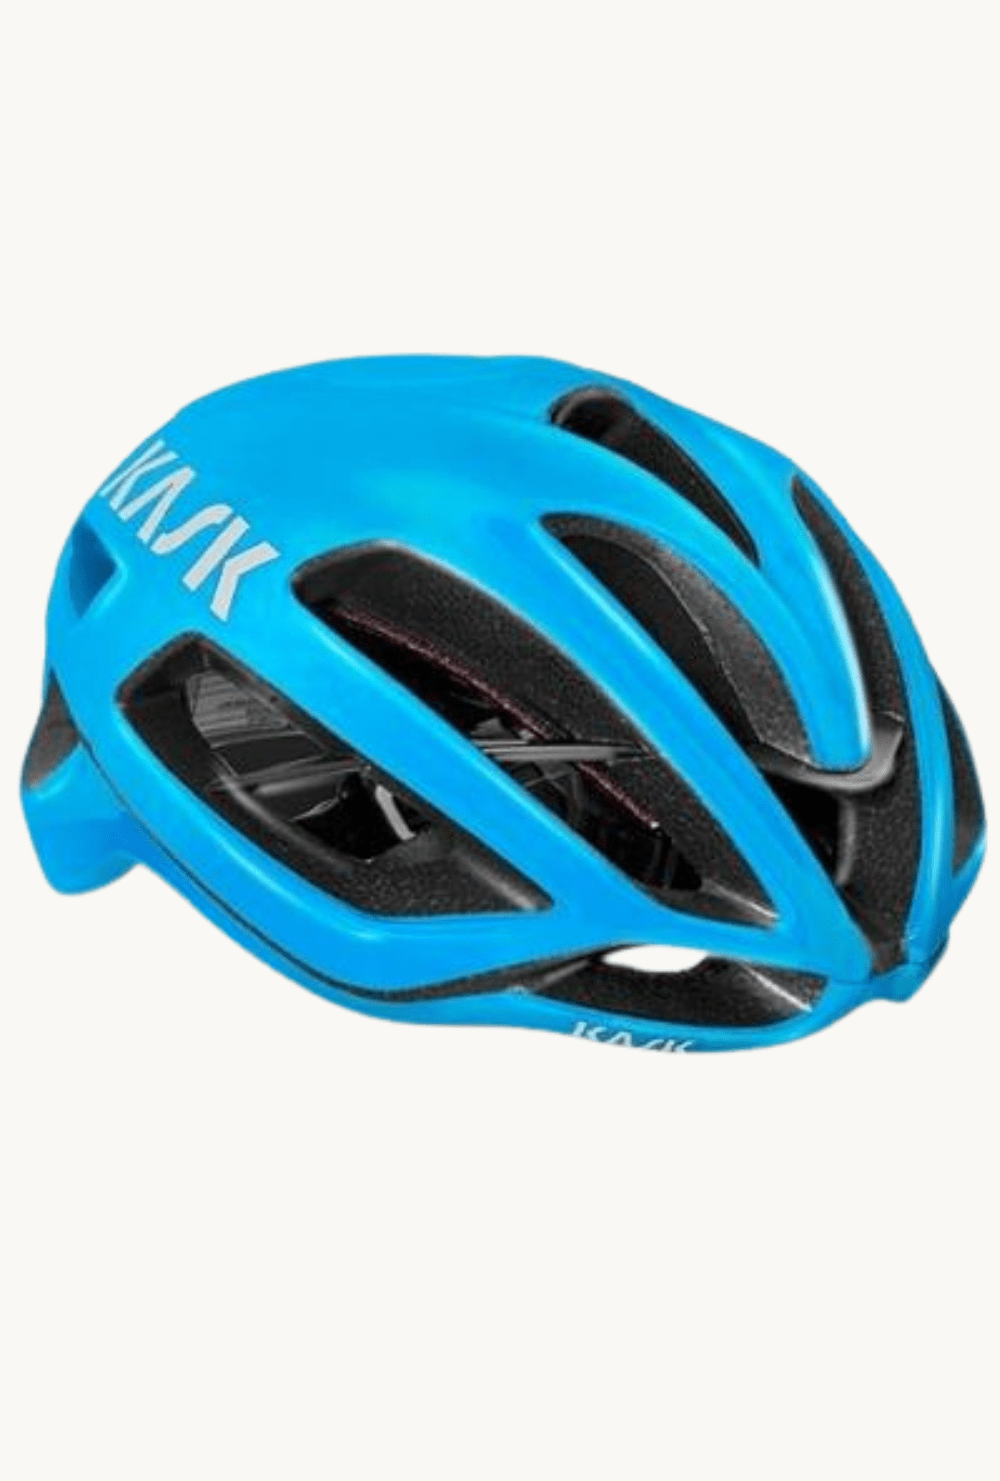 Helmet - Kask Protone Sky Bluemedium (52-58cm) / Sky Blue